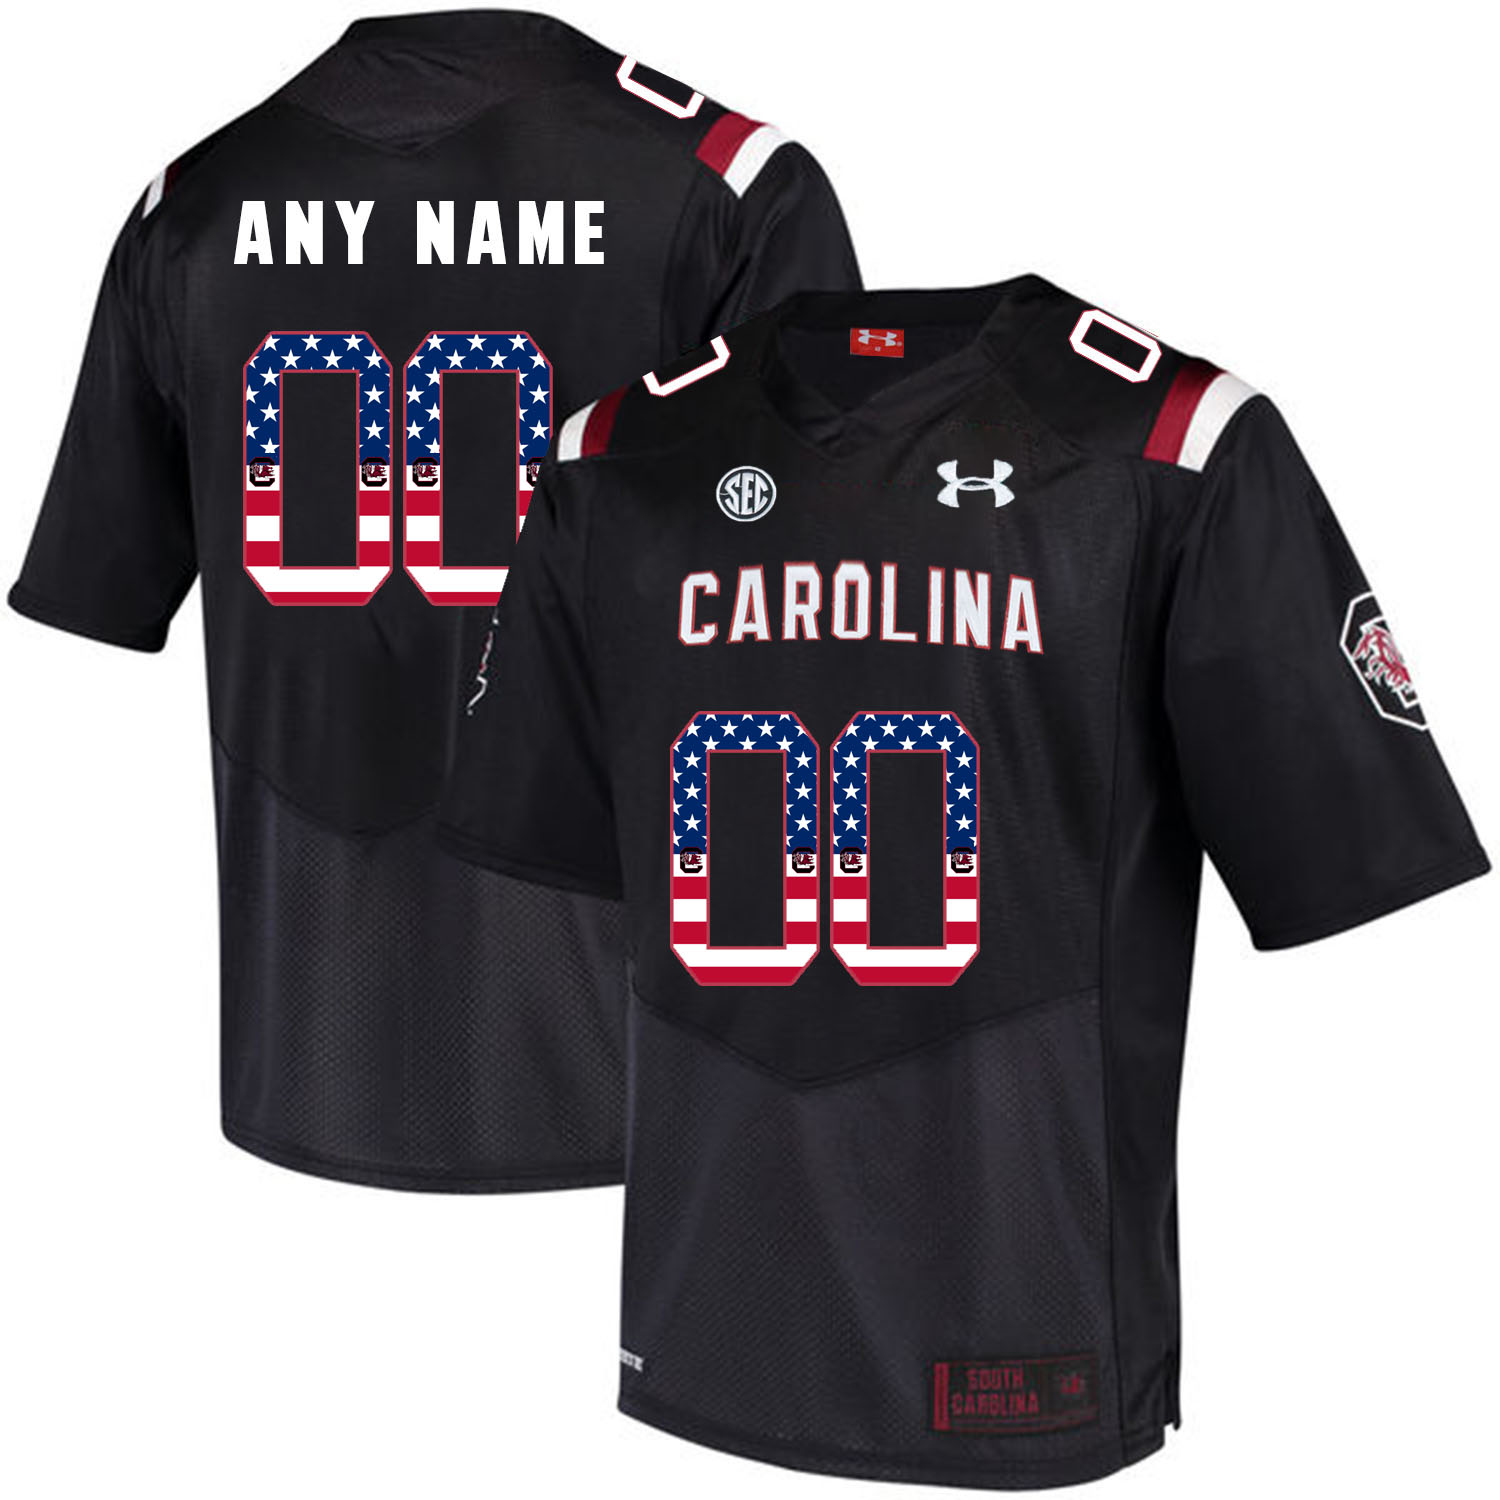 South Carolina Gamecocks Black Customized USA Flag College Football Jersey